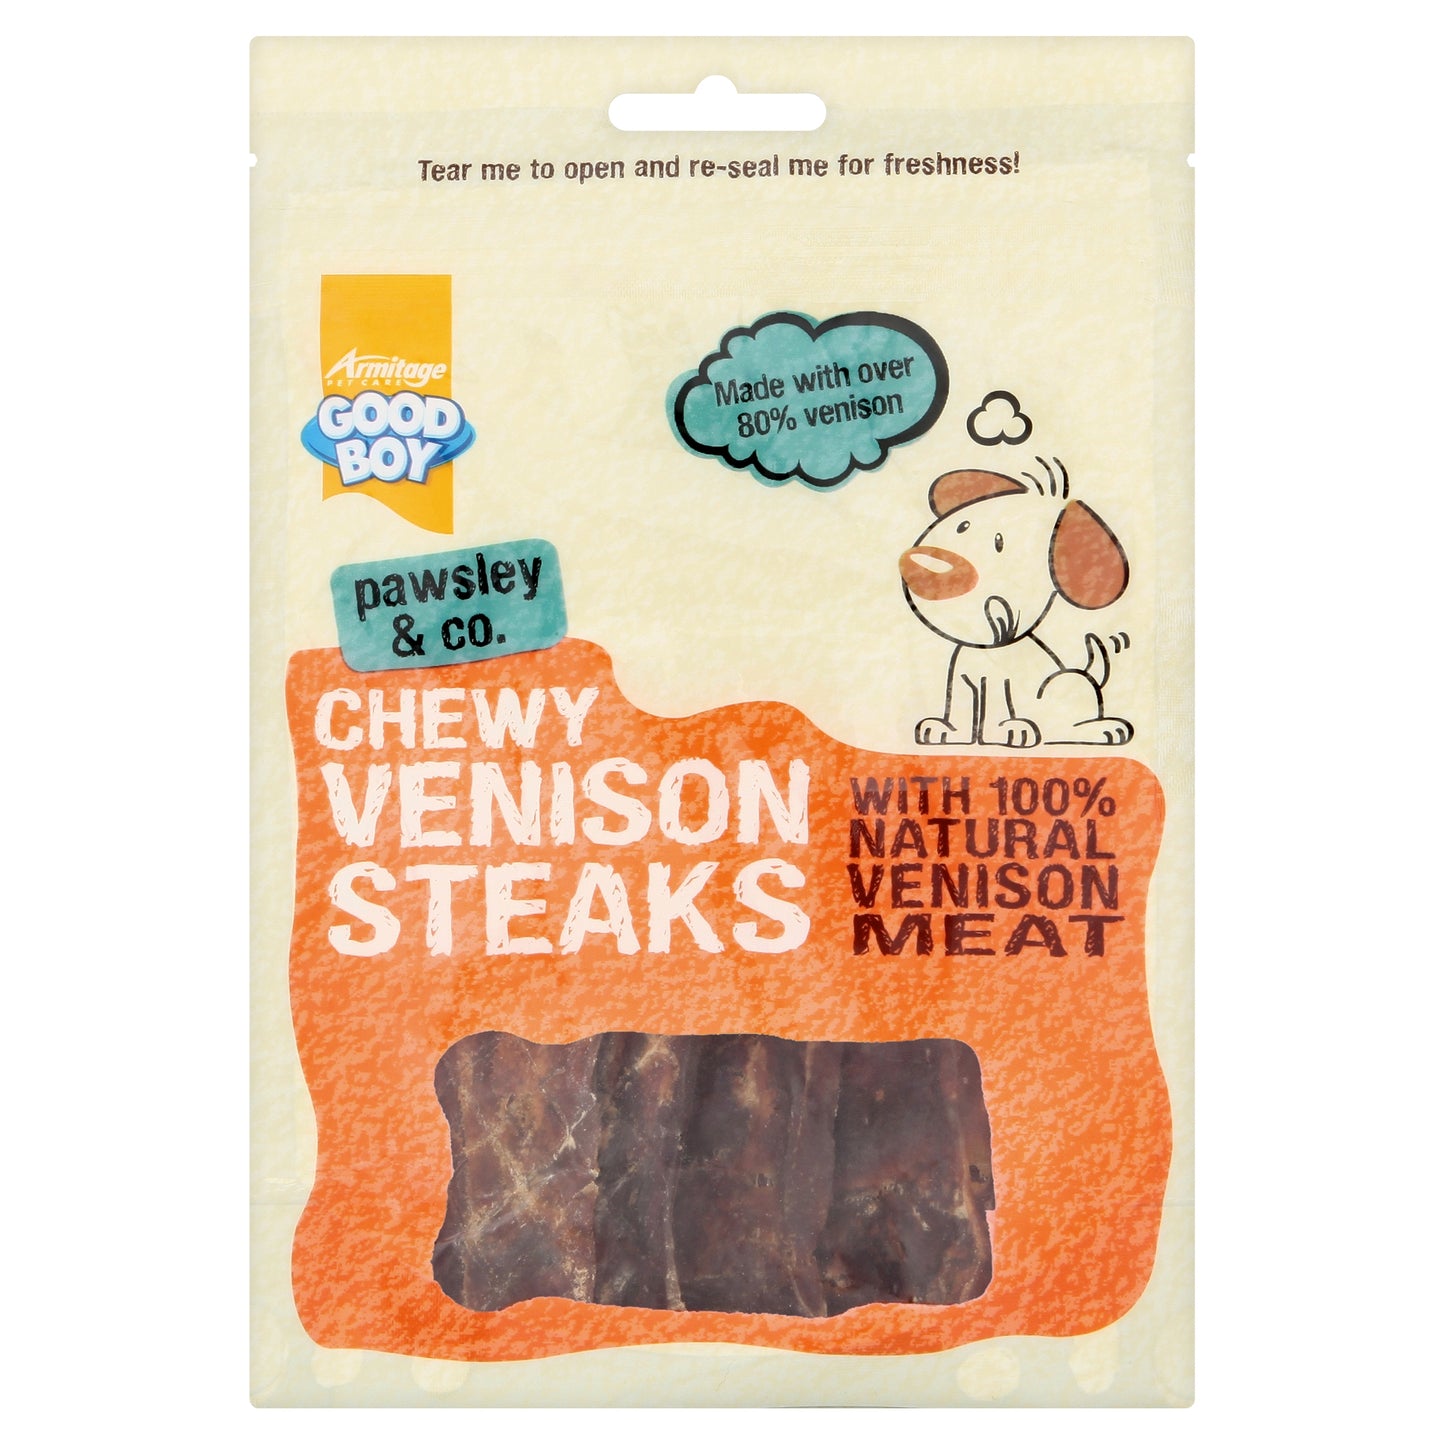 Good boy Chewy Venison Steaks - 80G